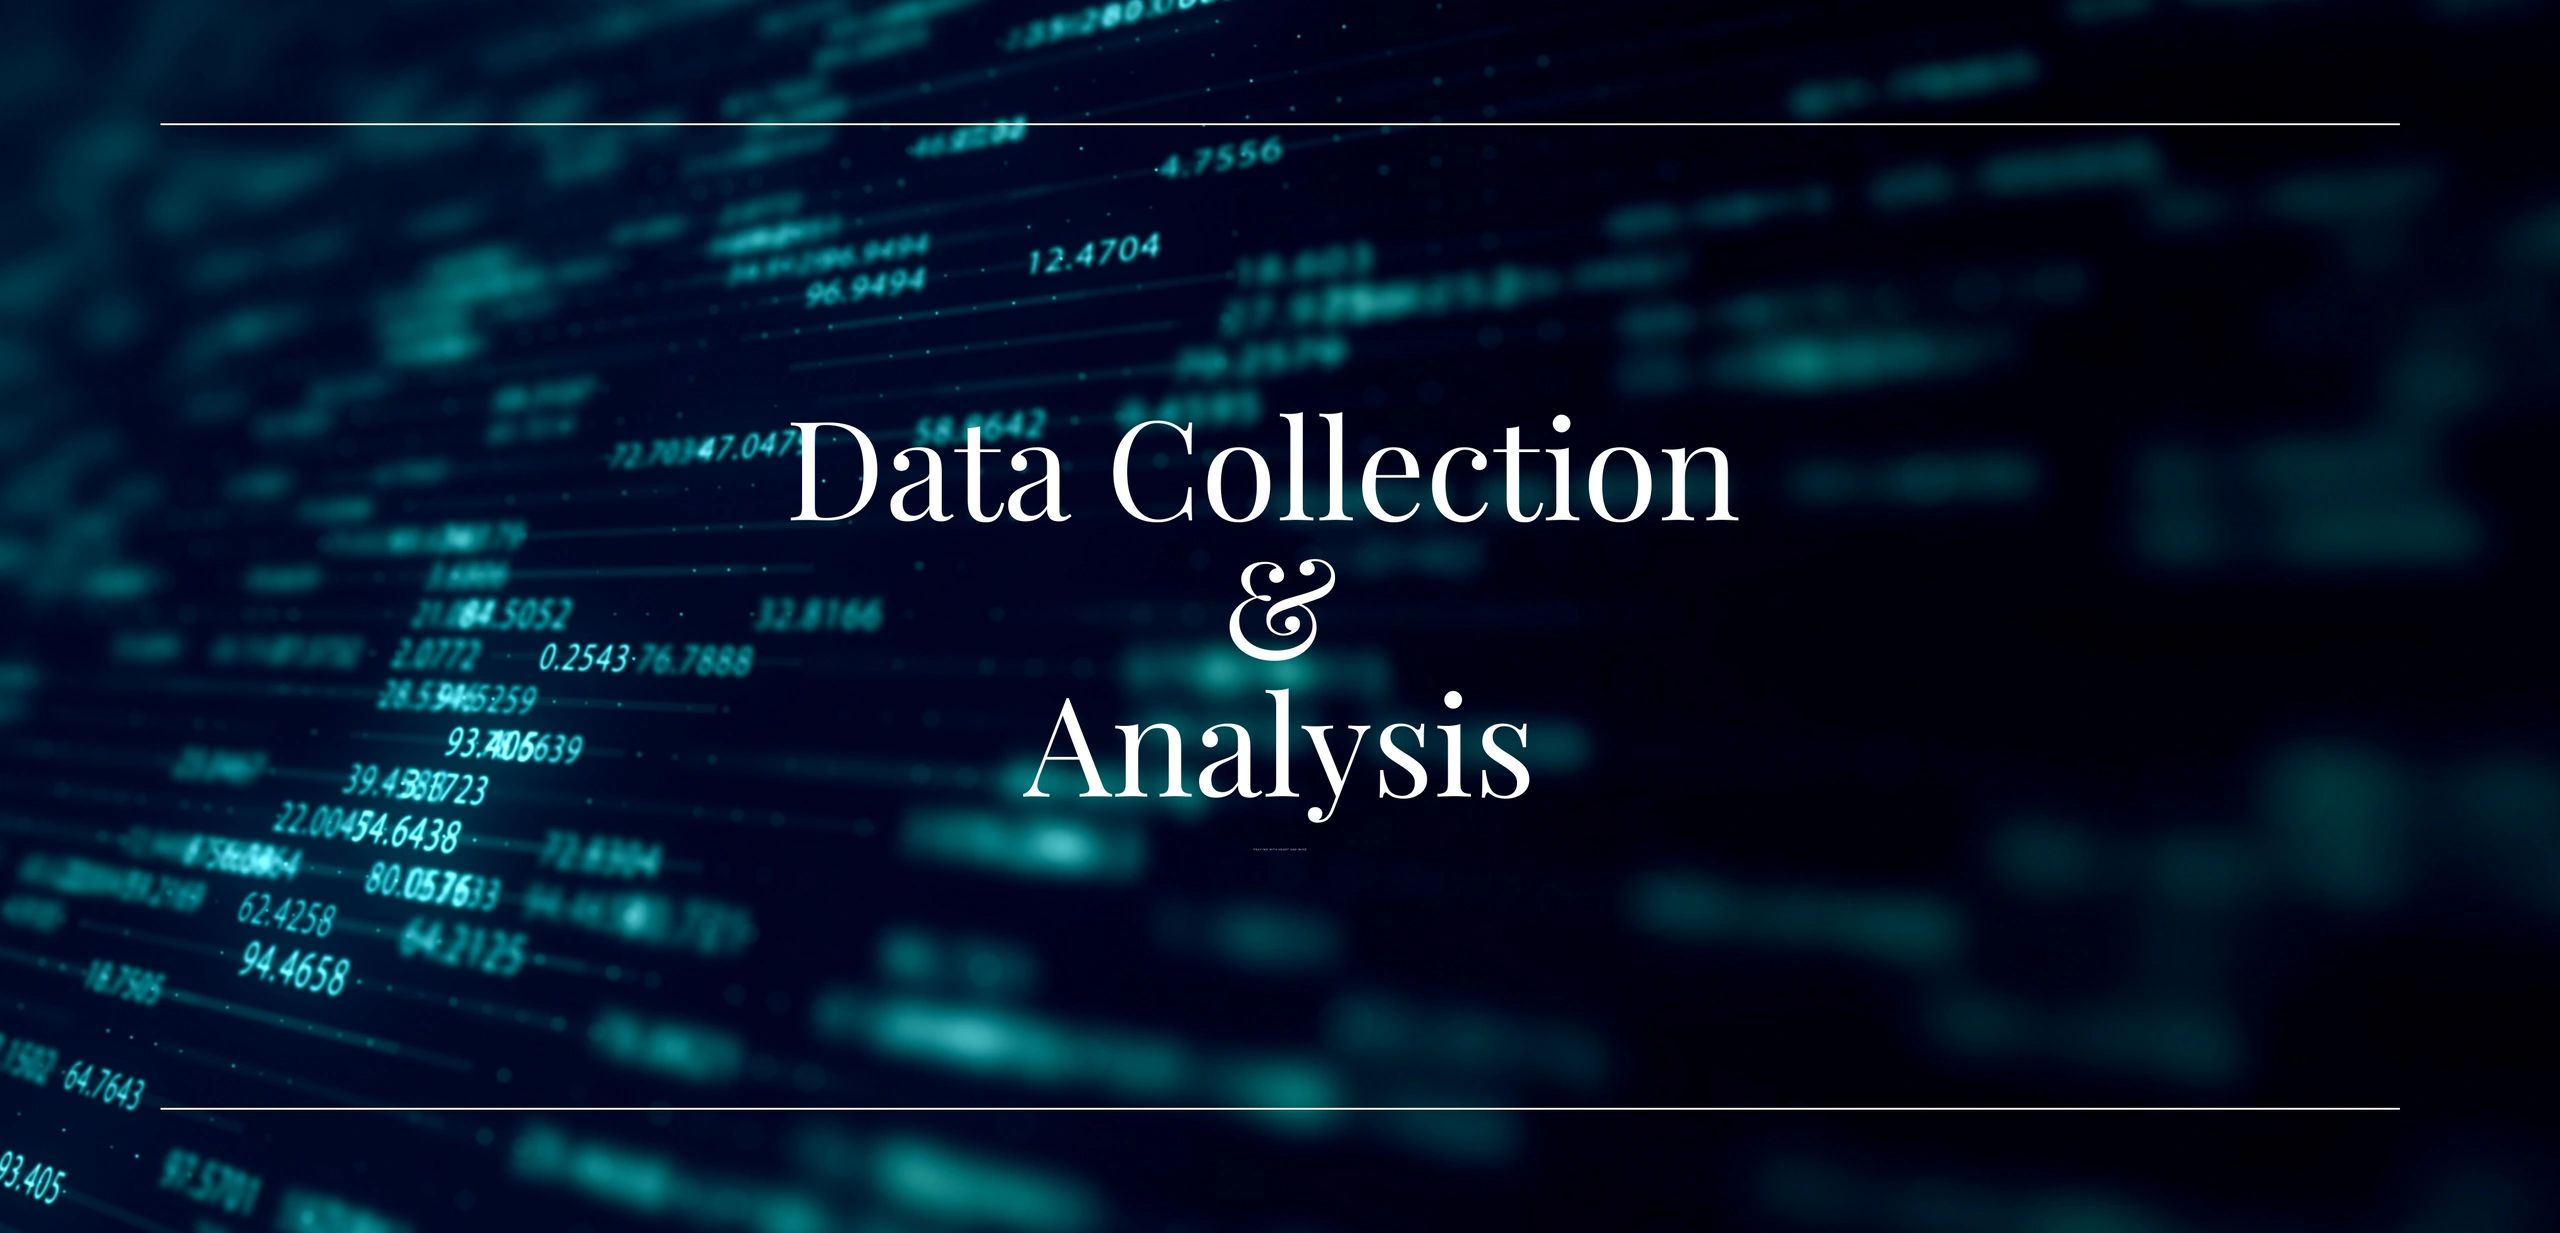 Data Collection
Data Analysis
Data Extraction
Augmented analytics
Data analytics
Ashford Alesseea